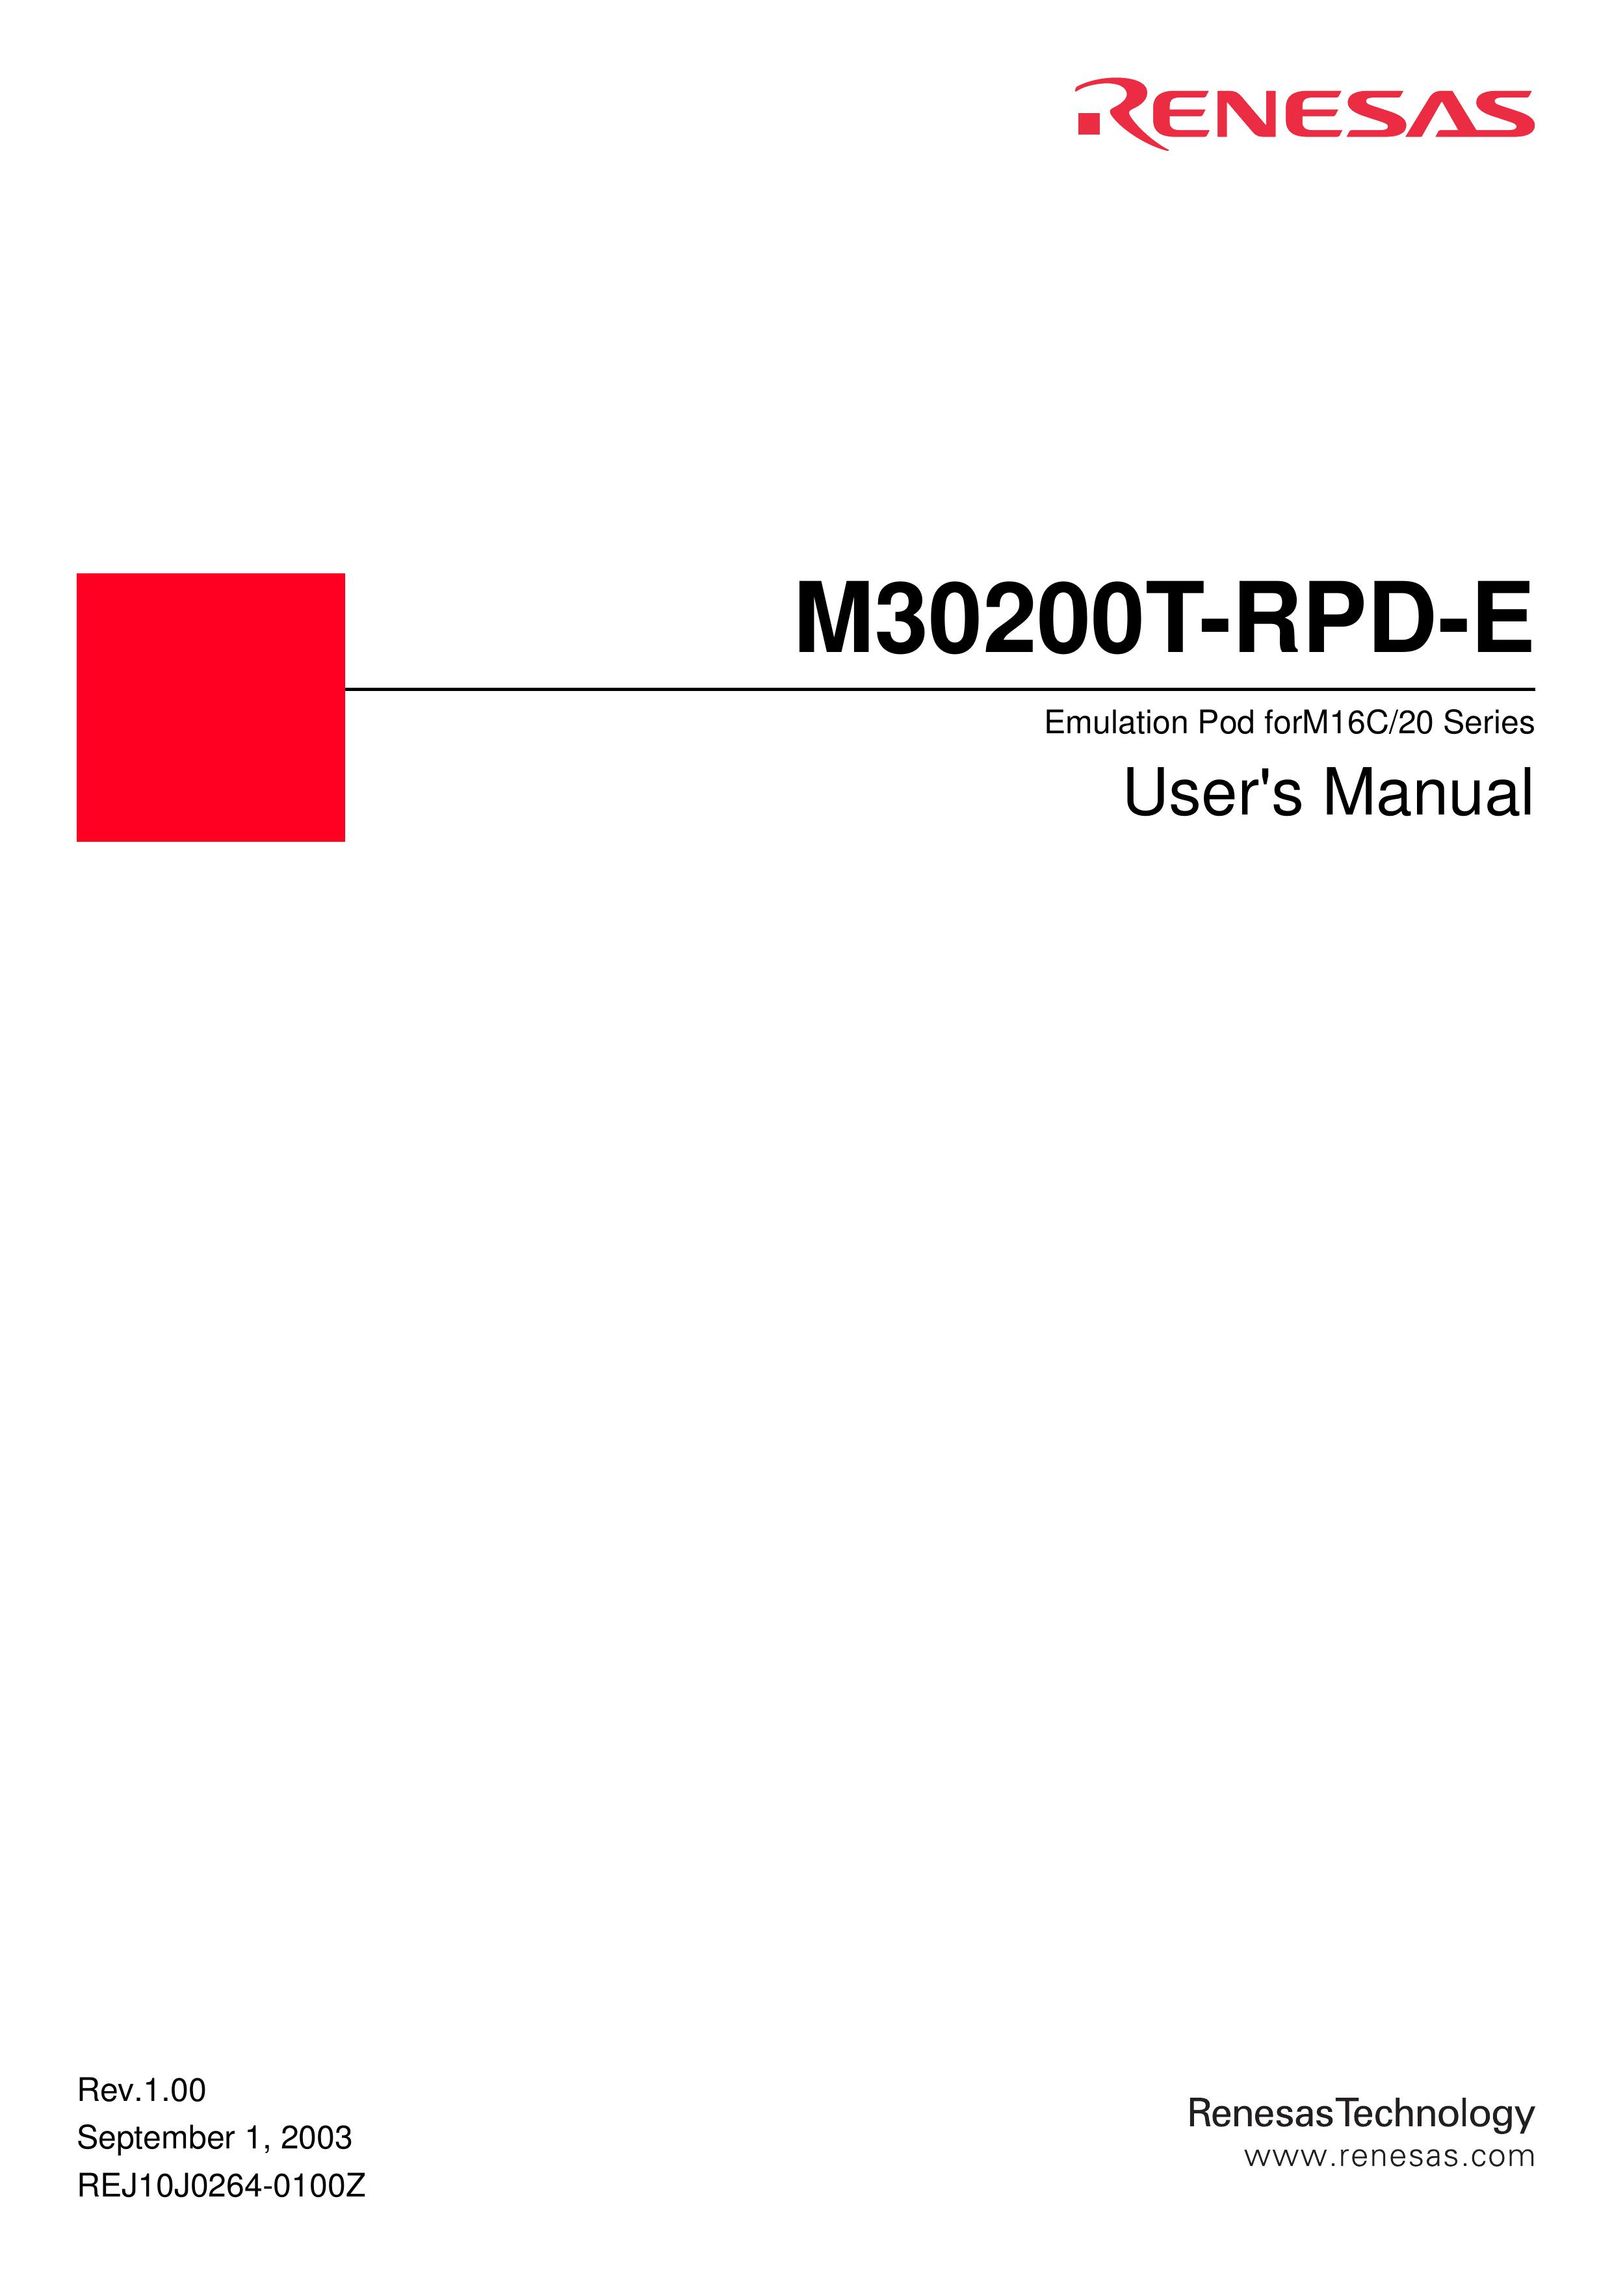 Renesas M30200T-RPD-E Network Card User Manual